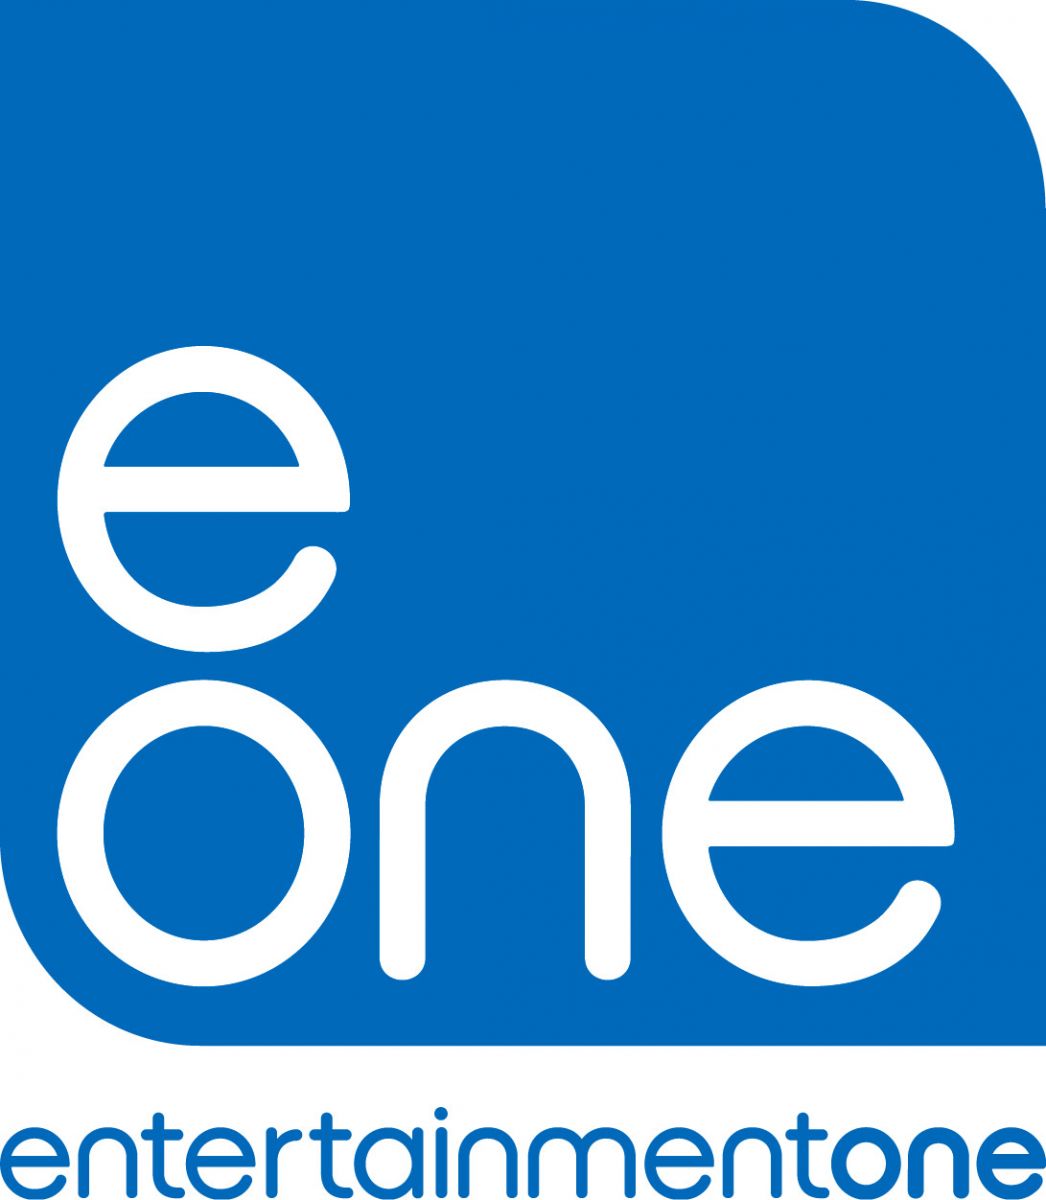 eone-logo_blue_pp114.jpg